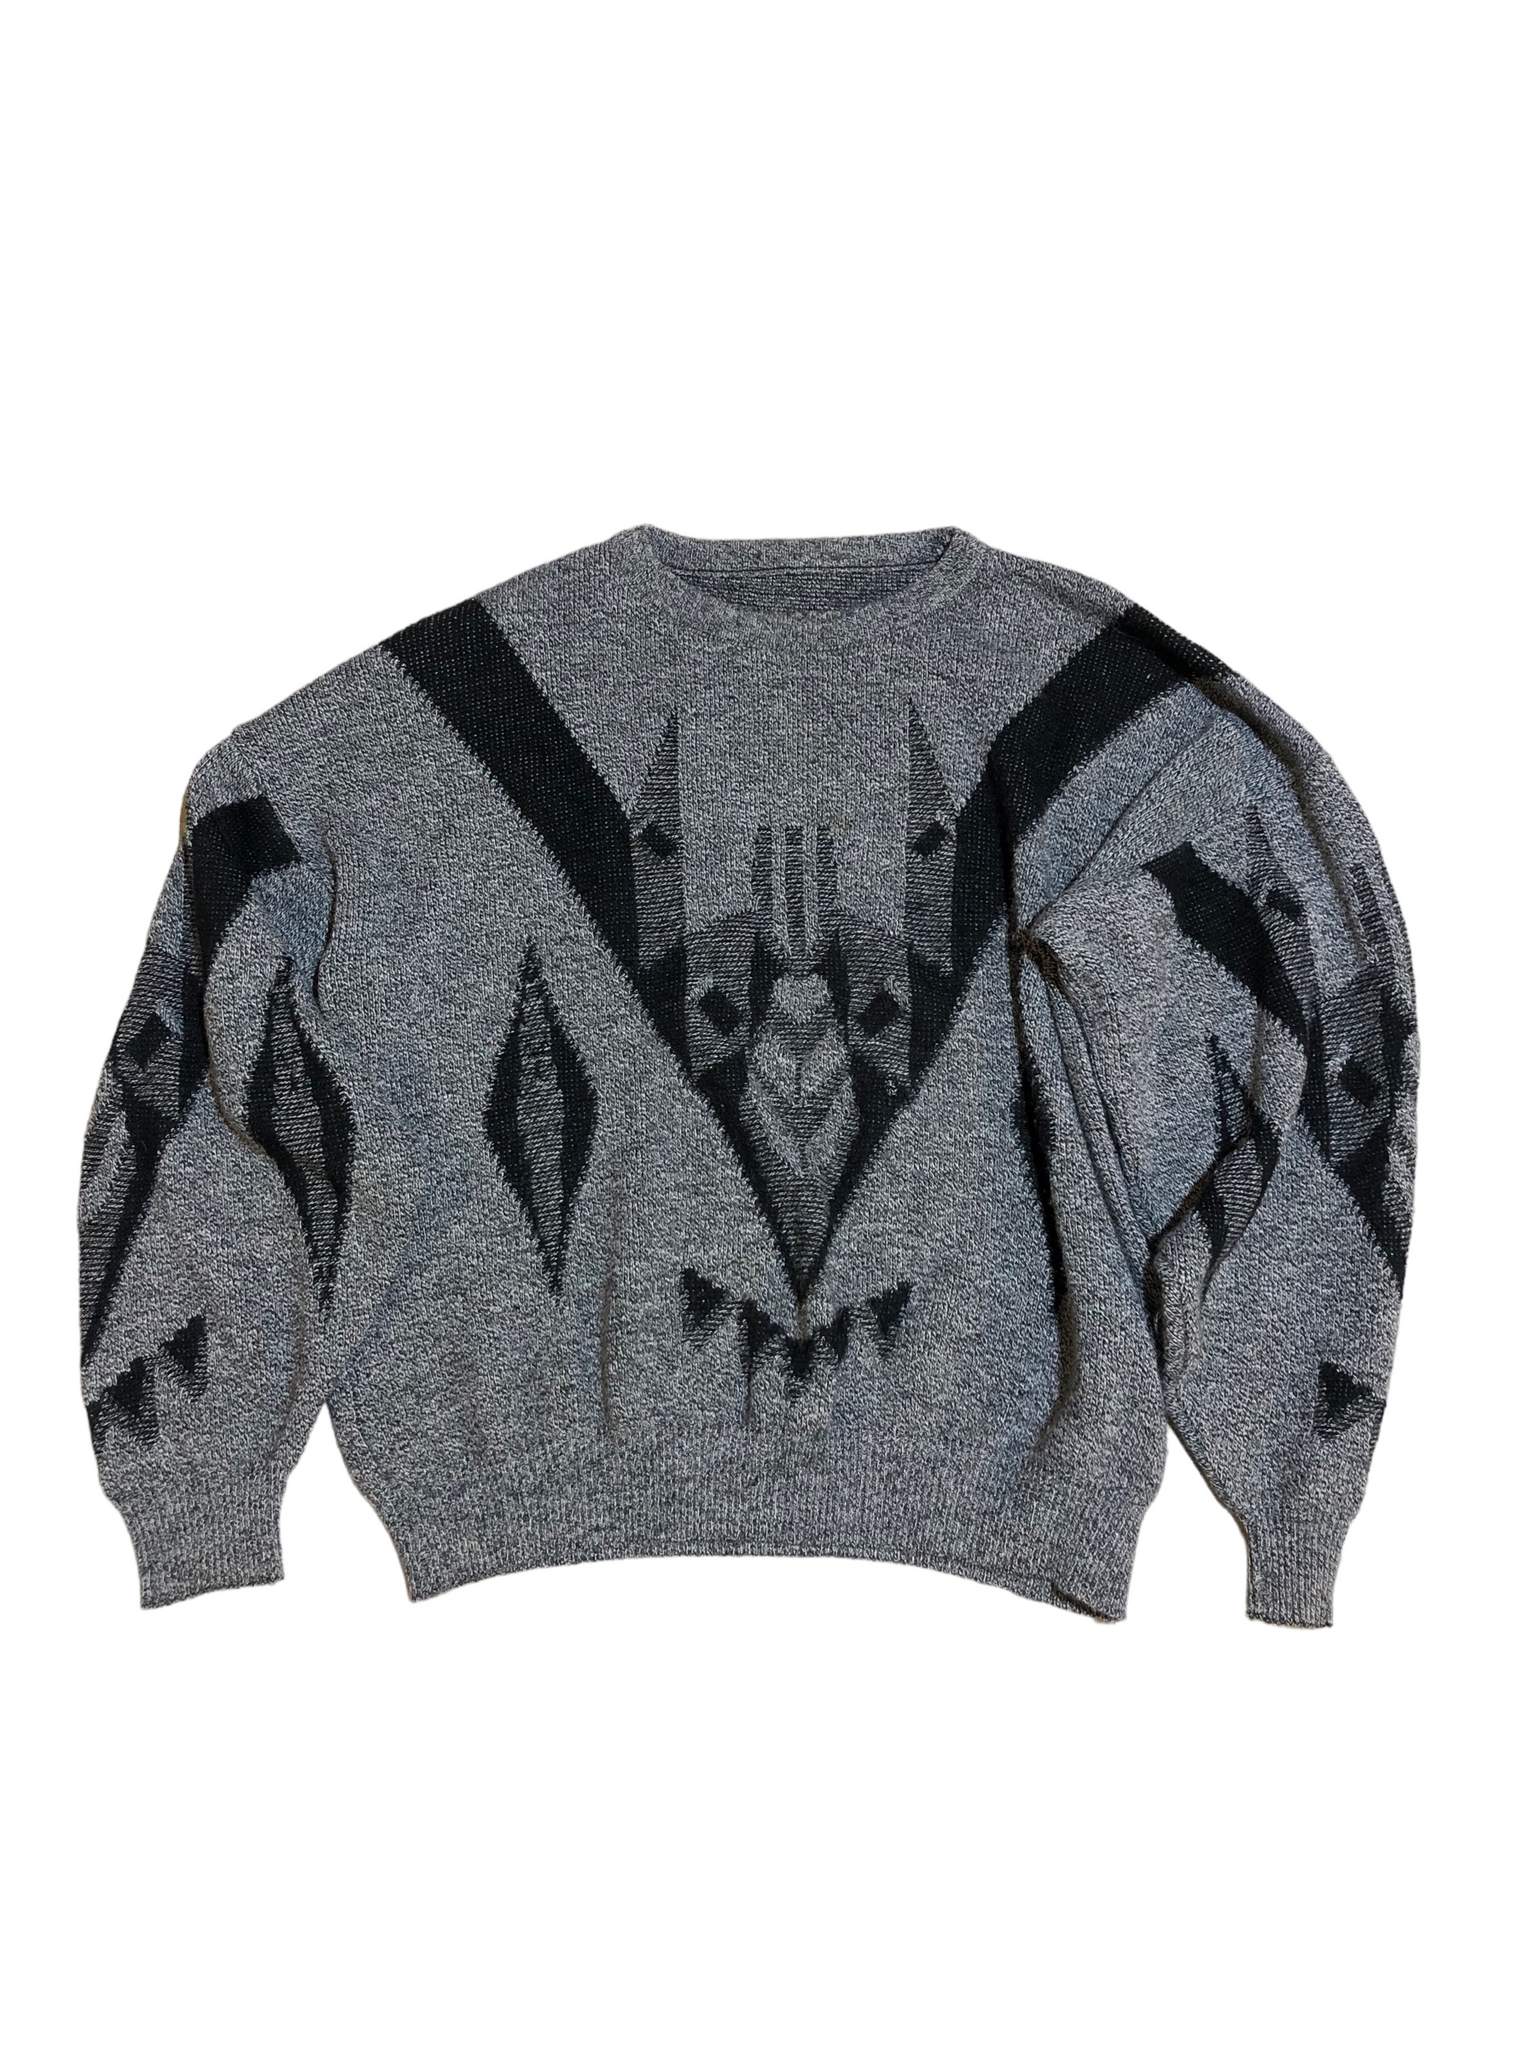 Vintage Grey/Black Knit sweater